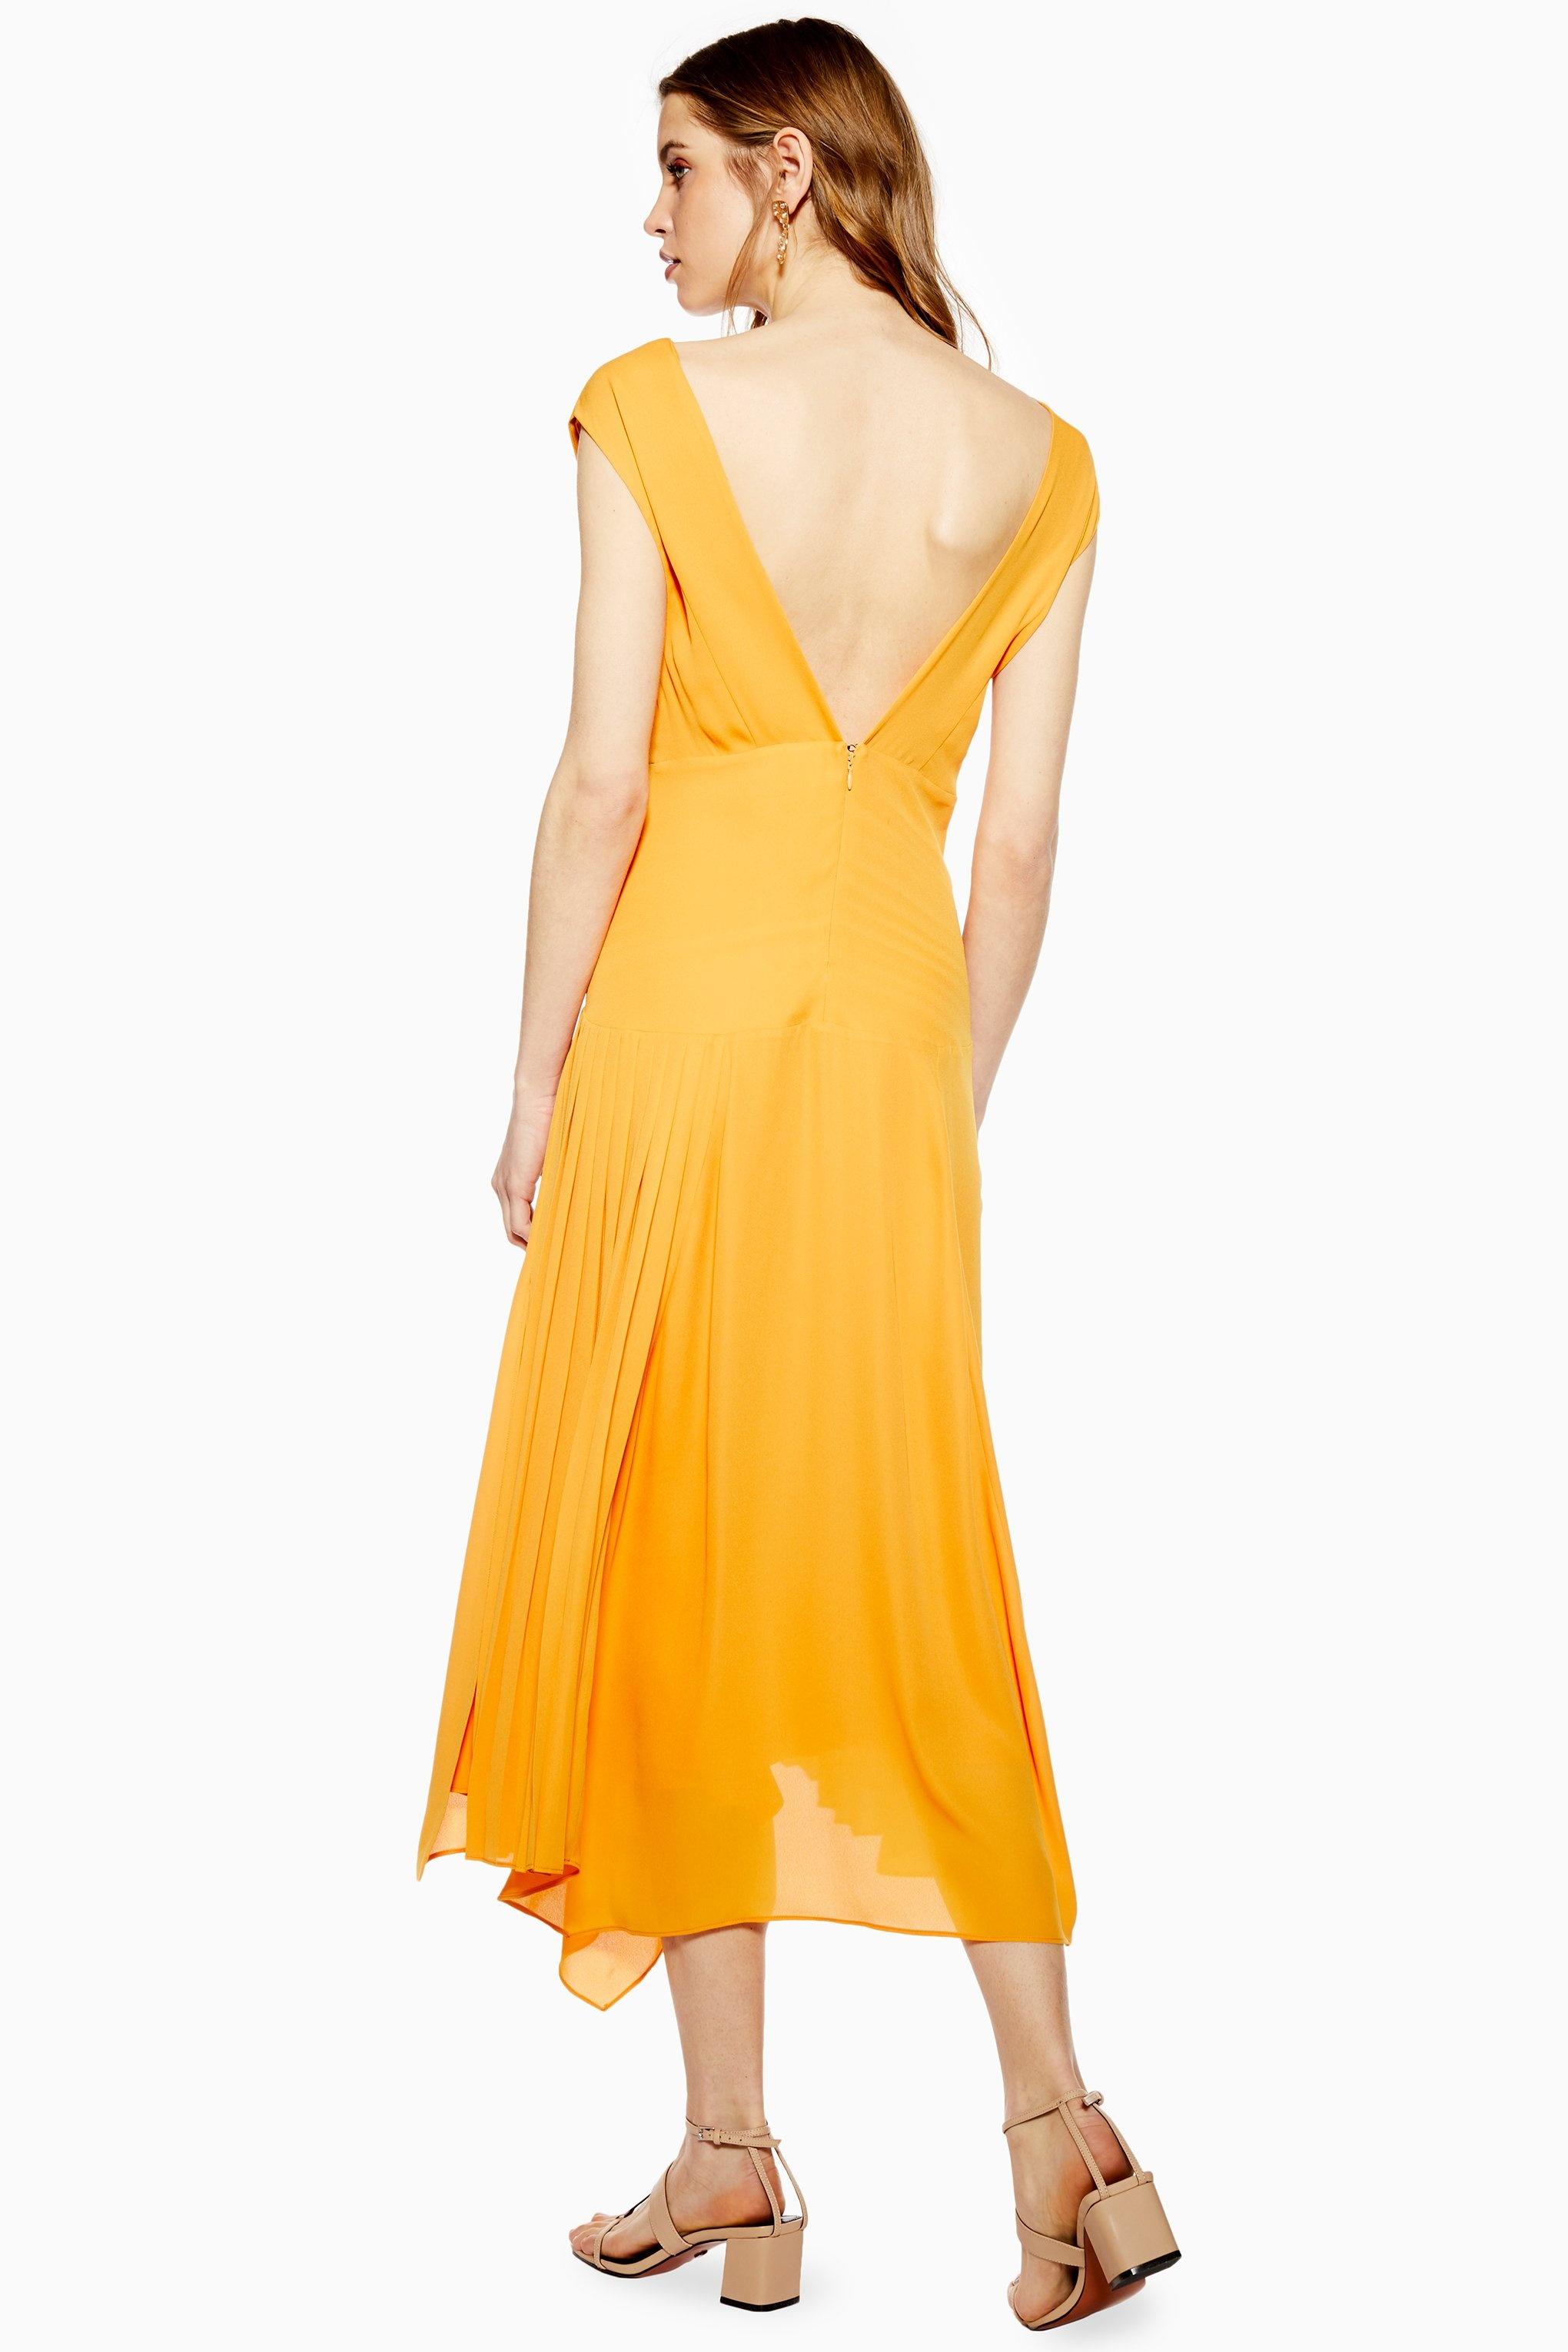 yellow pinafore dress